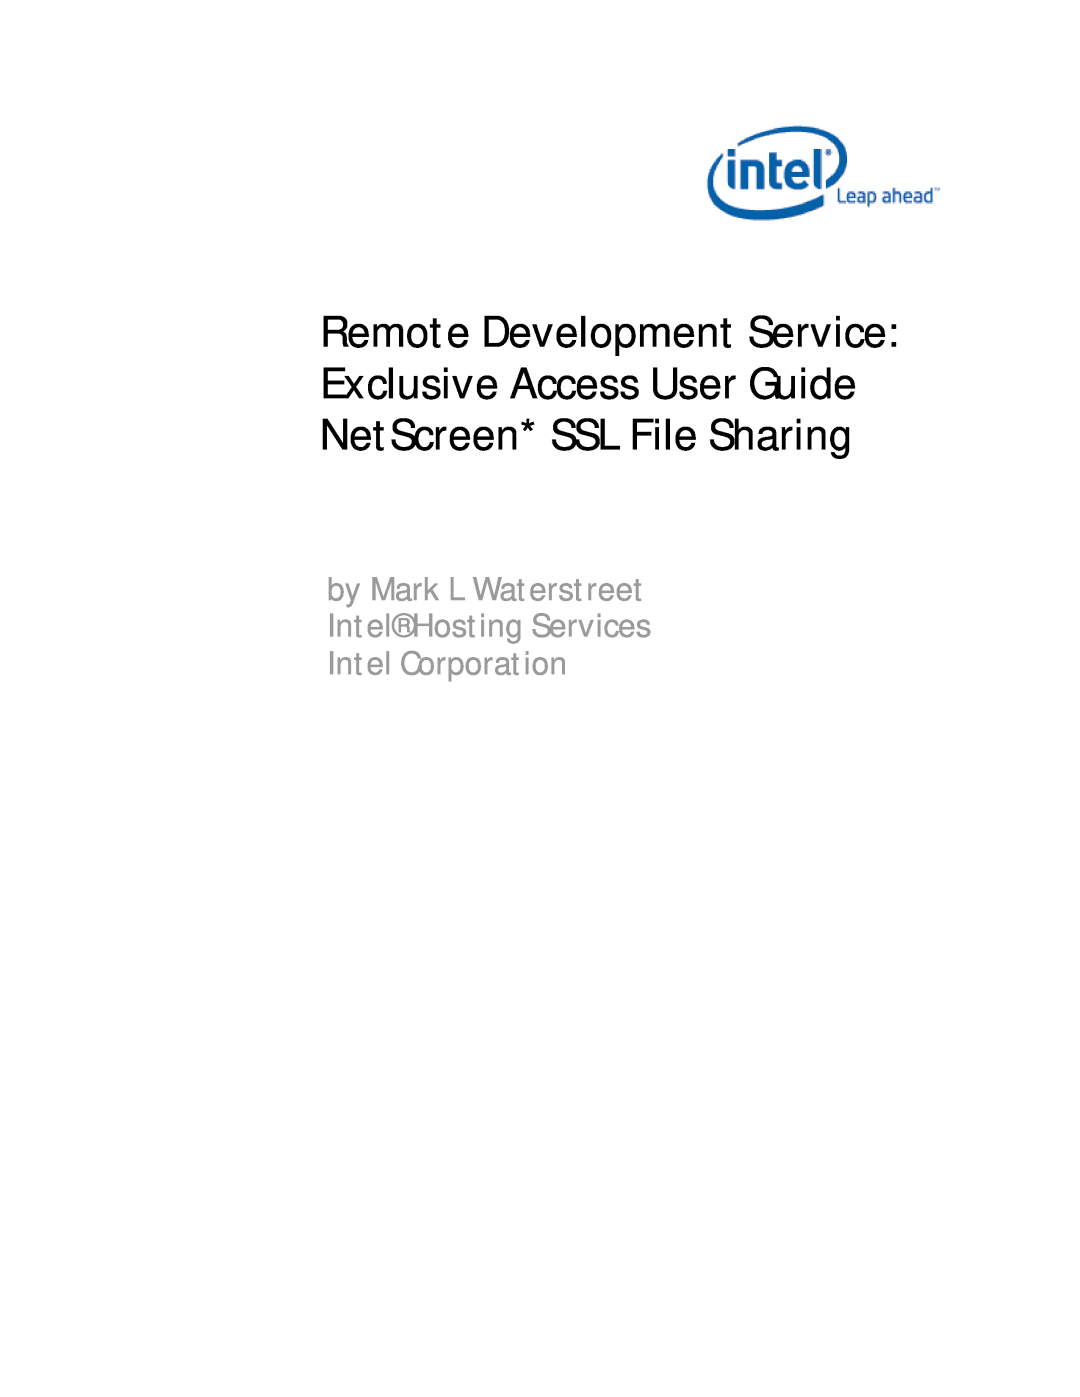 Intel 120000 manual Remote Development Service, Exclusive Access User Guide, NetScreen* SSL File Sharing 